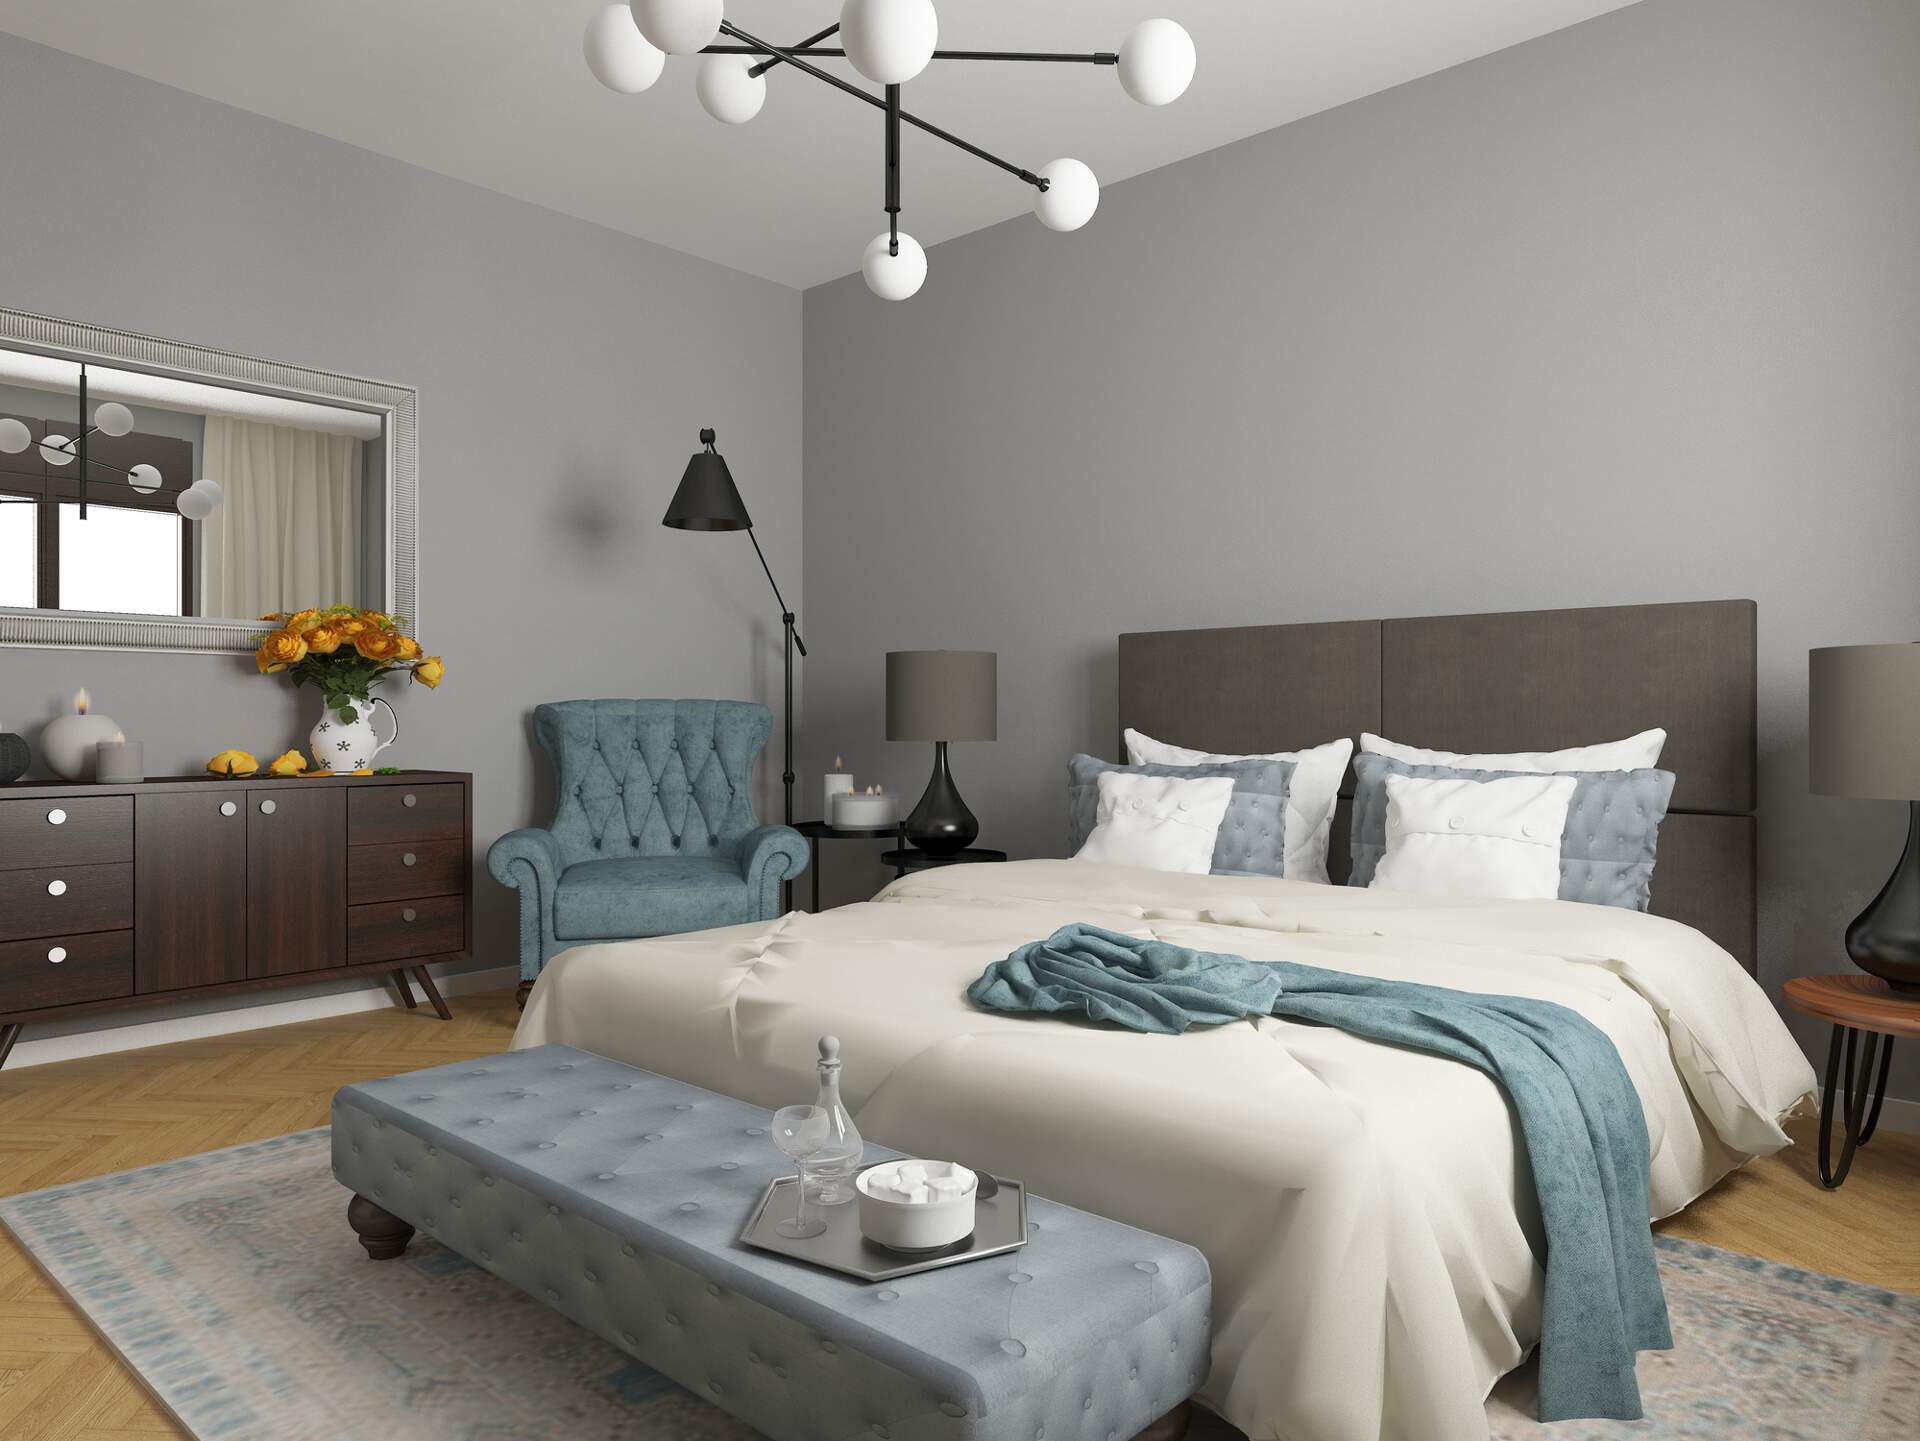 Sleep Decor – 7 Bedroom Design Tips That Will Improve Your Sleep Quality